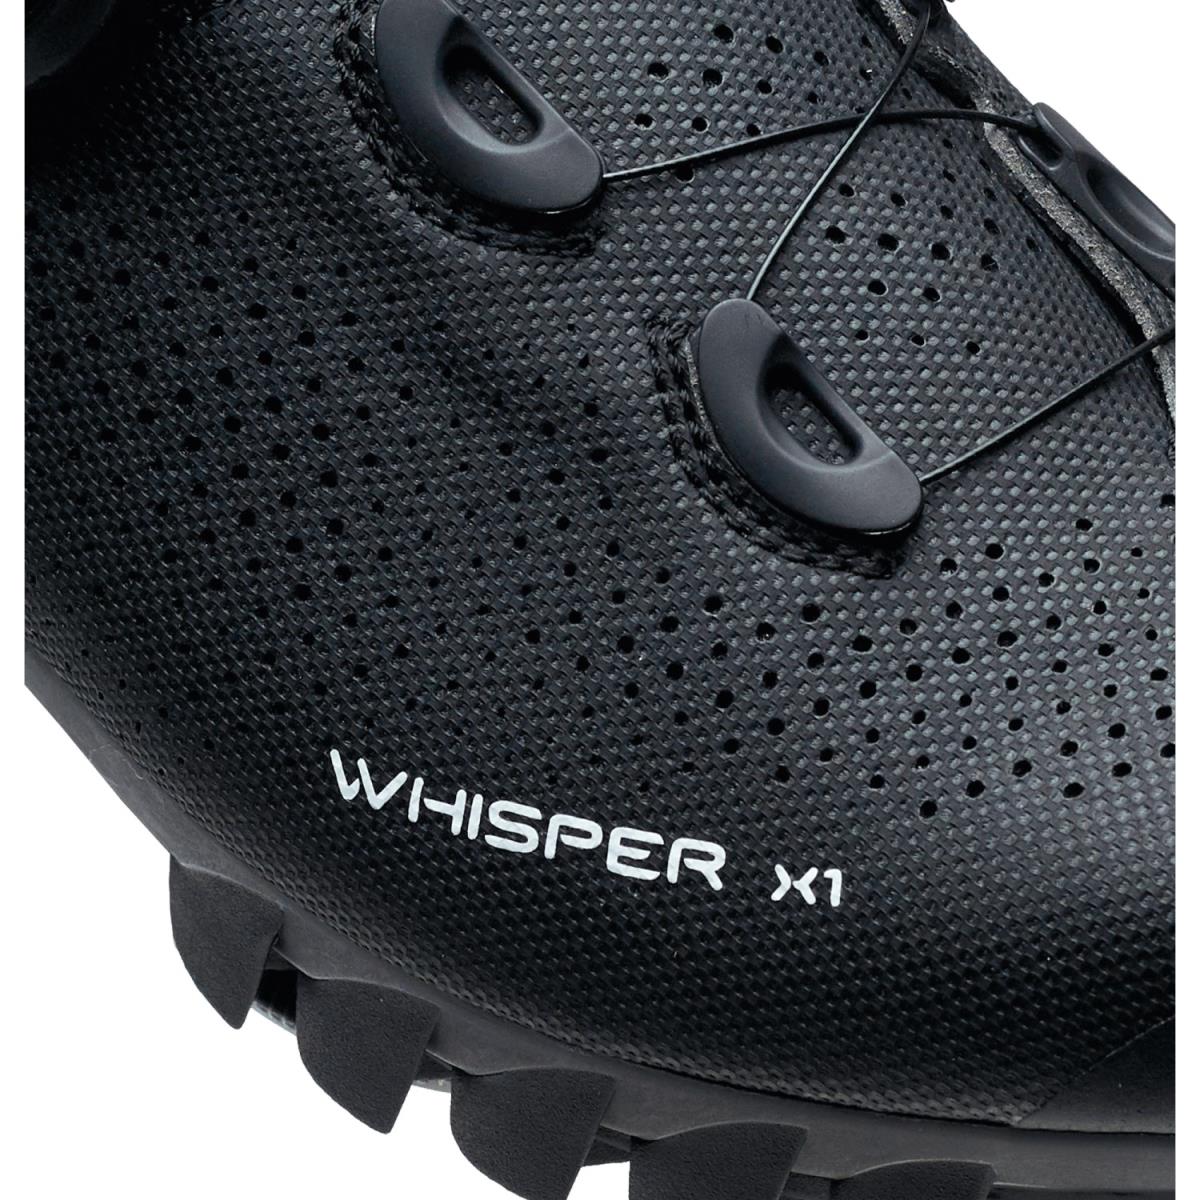 Zapatillas Catlike Whisper X1 Mtb Black |